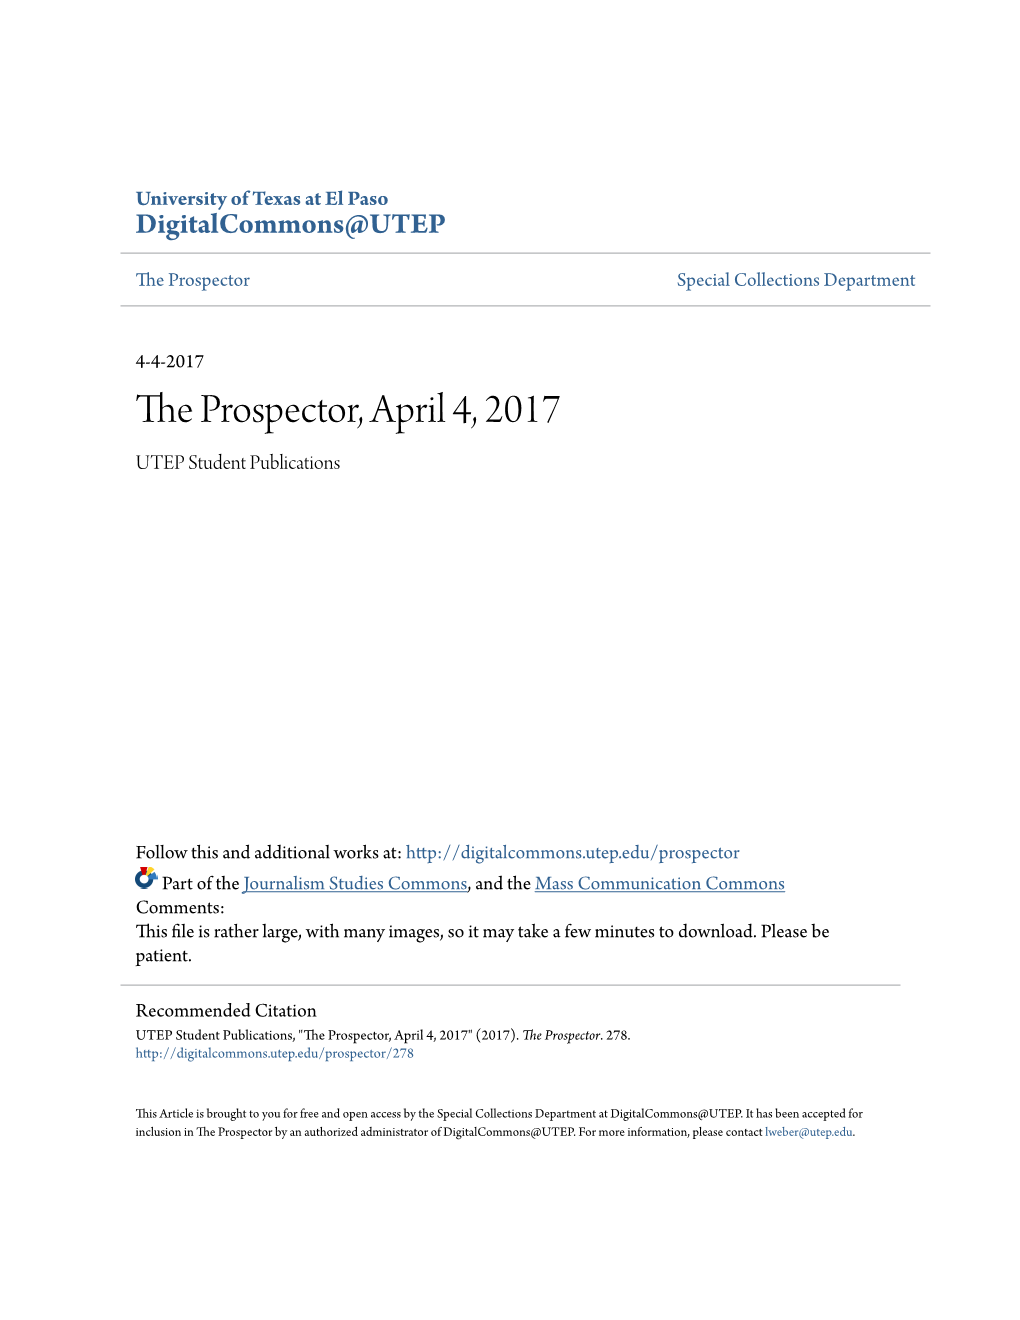 The Prospector, April 4, 2017